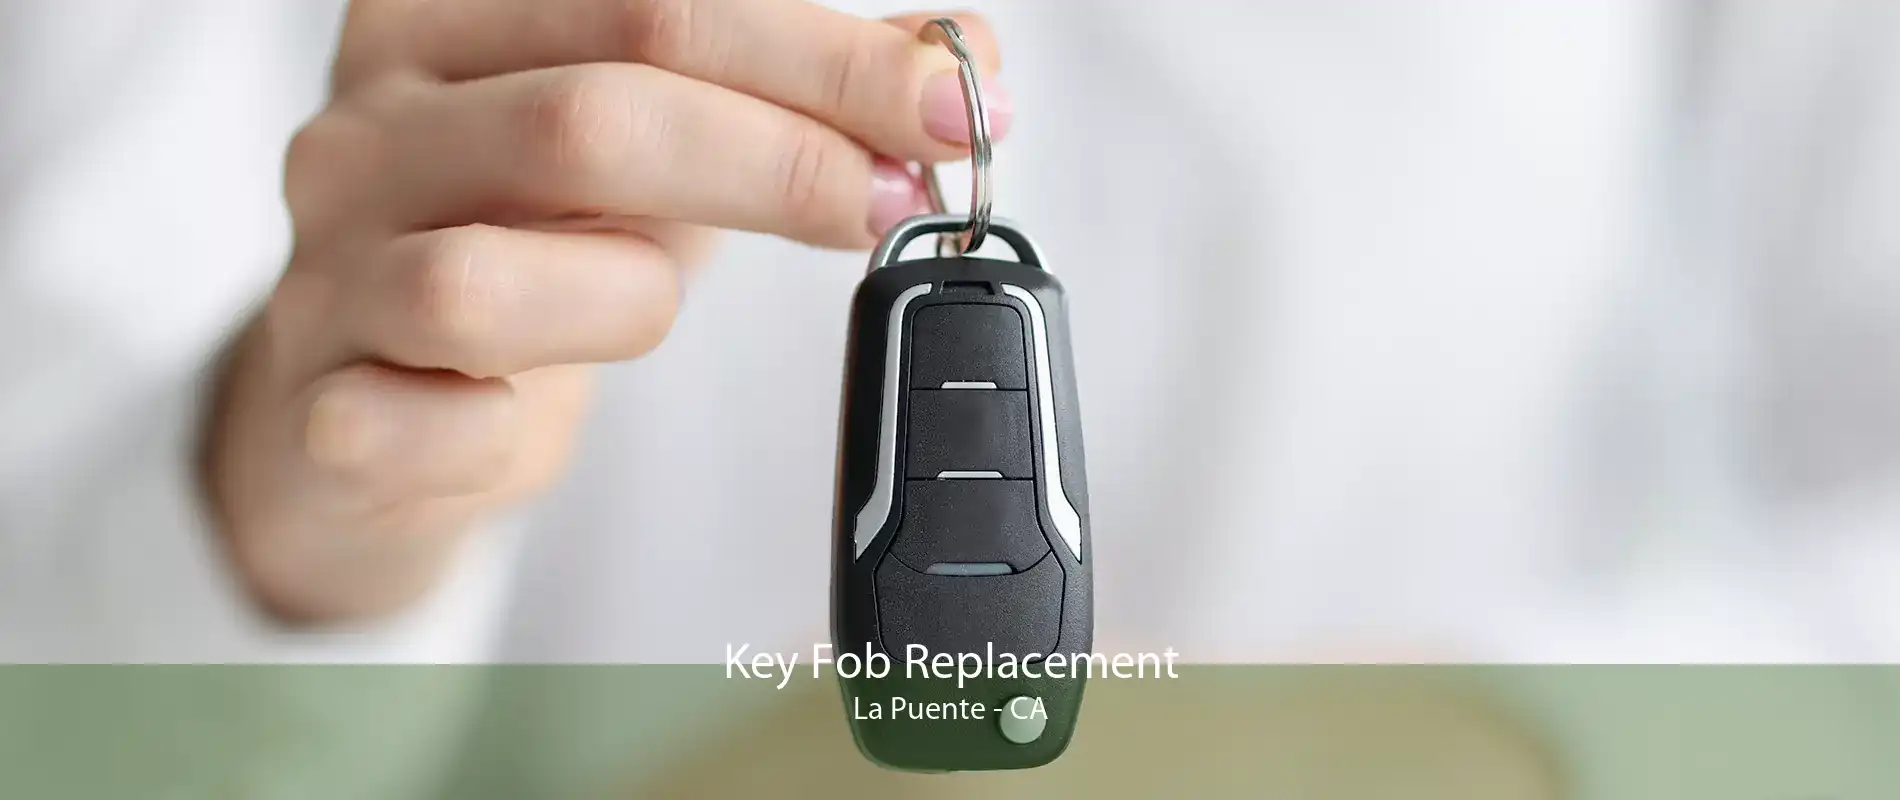 Key Fob Replacement La Puente - CA